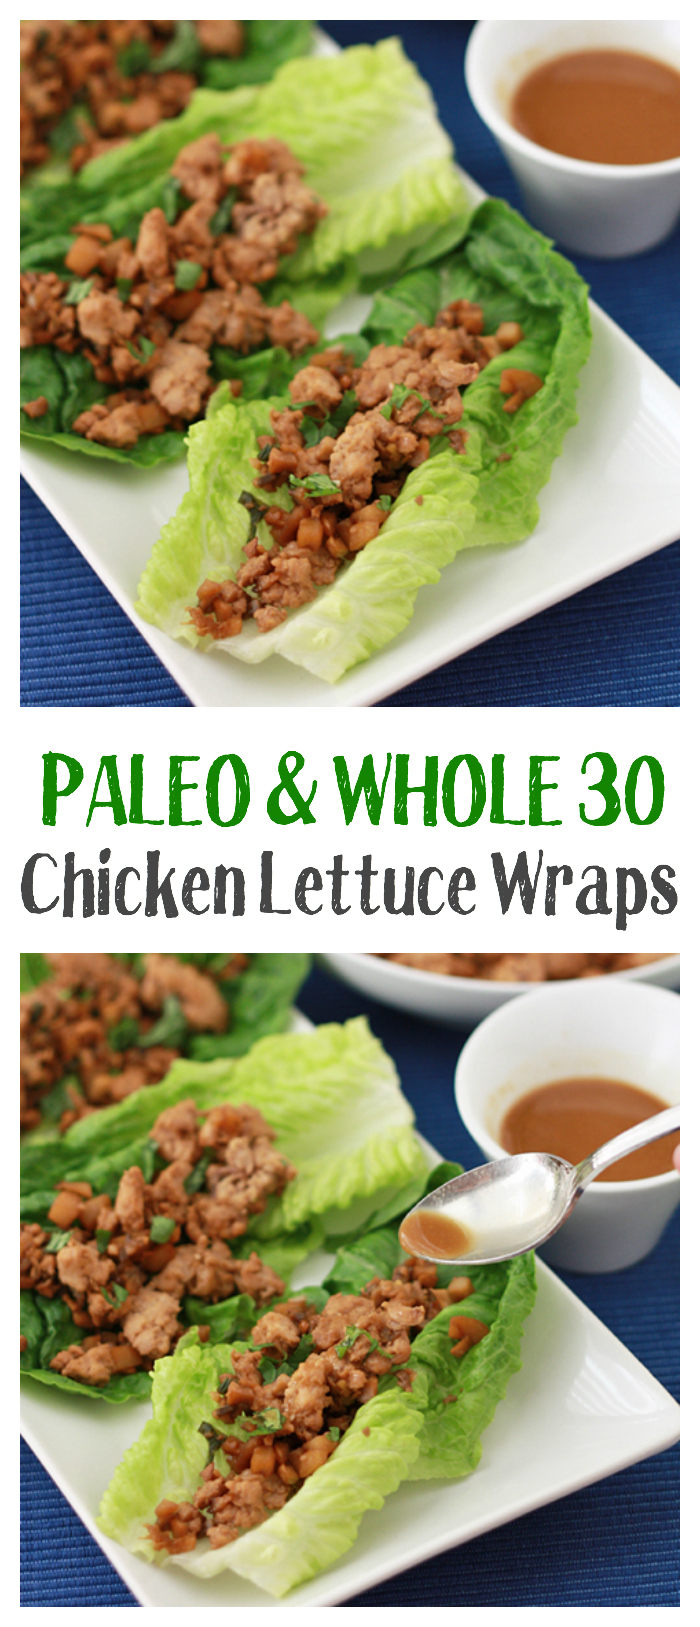 buffalo chicken lettuce wraps practical paleo